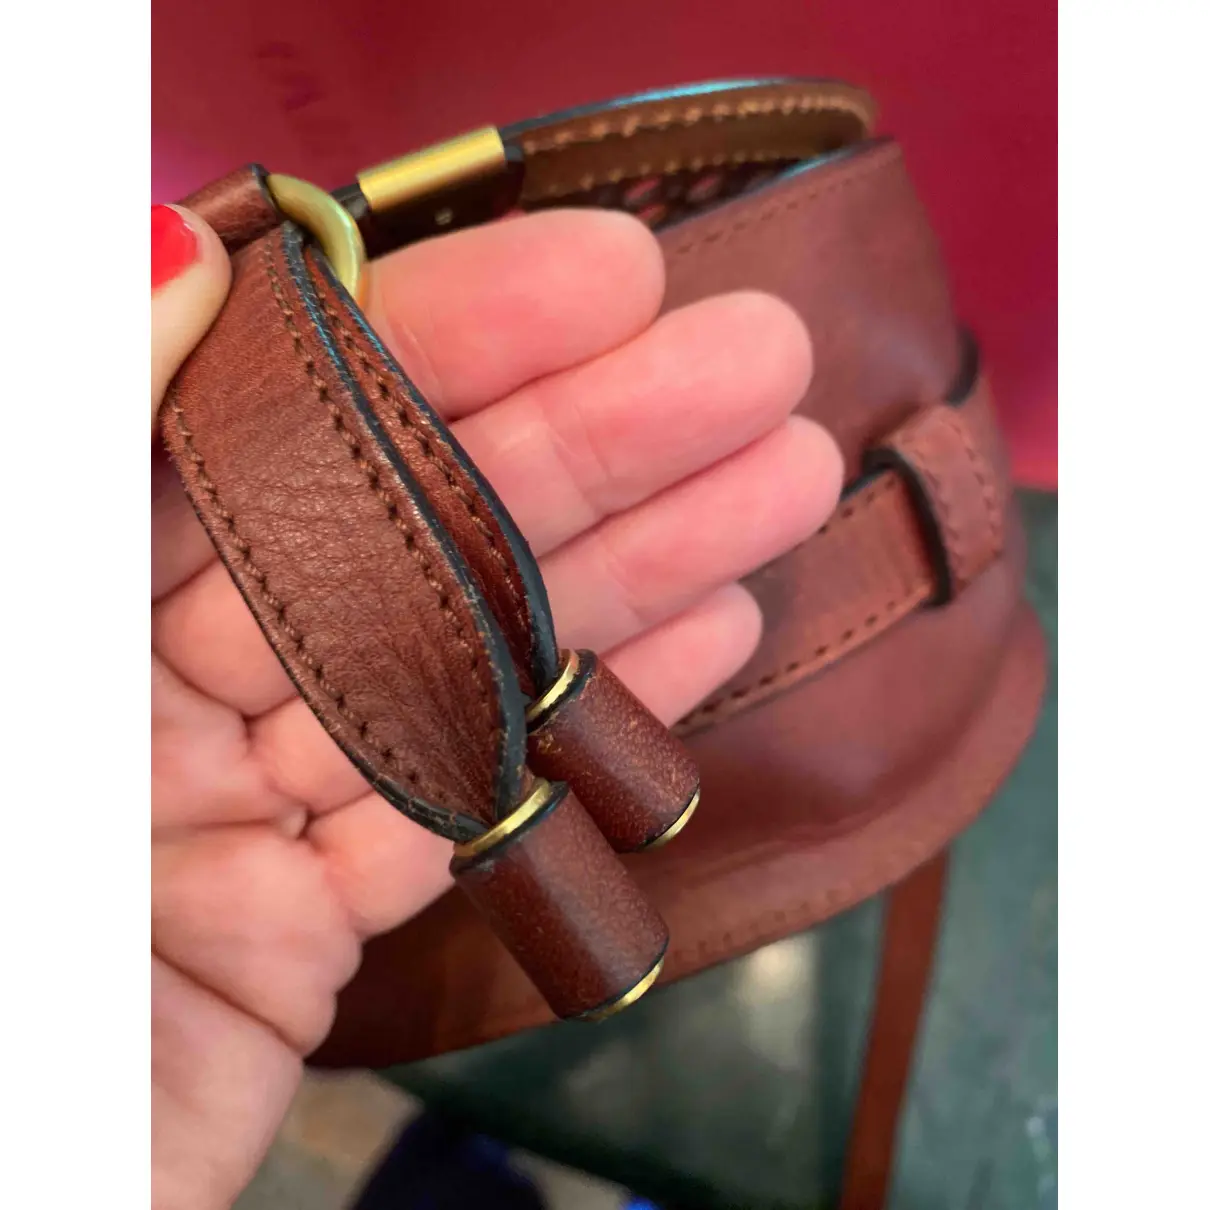 Drew leather handbag Chloé